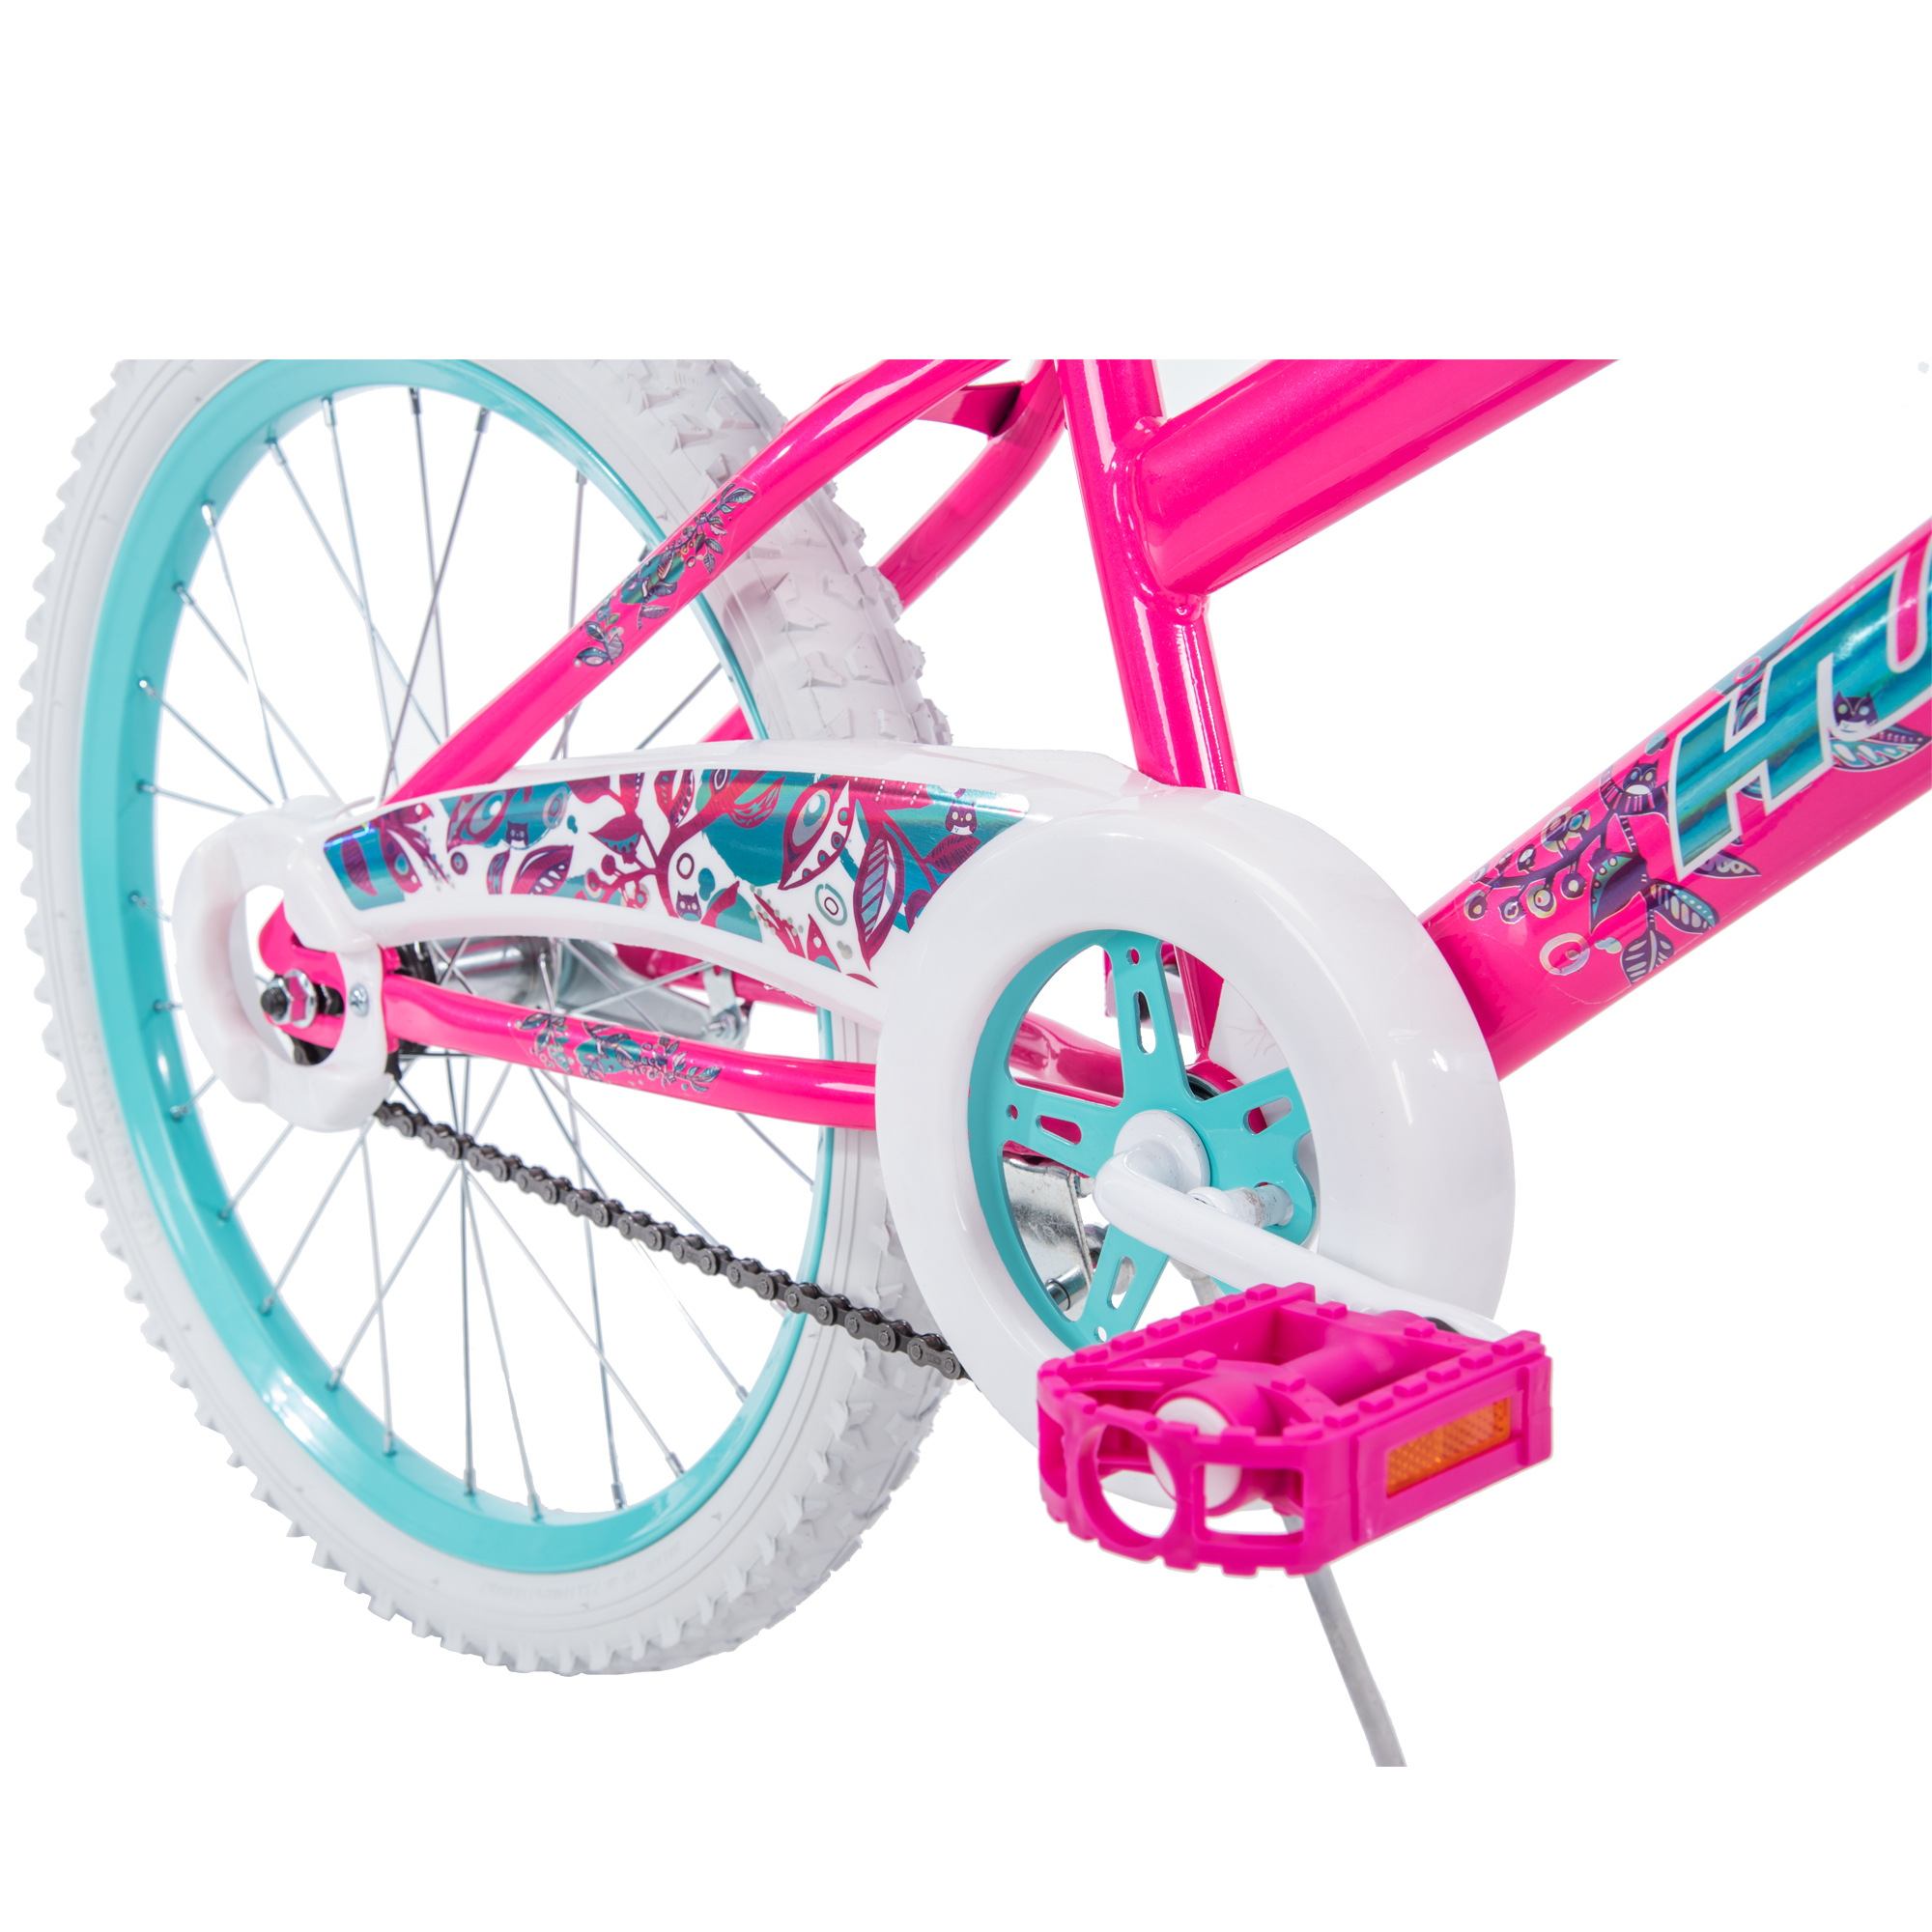 20" Huffy Girls' Sea Star Bike, Pink - image 4 of 6